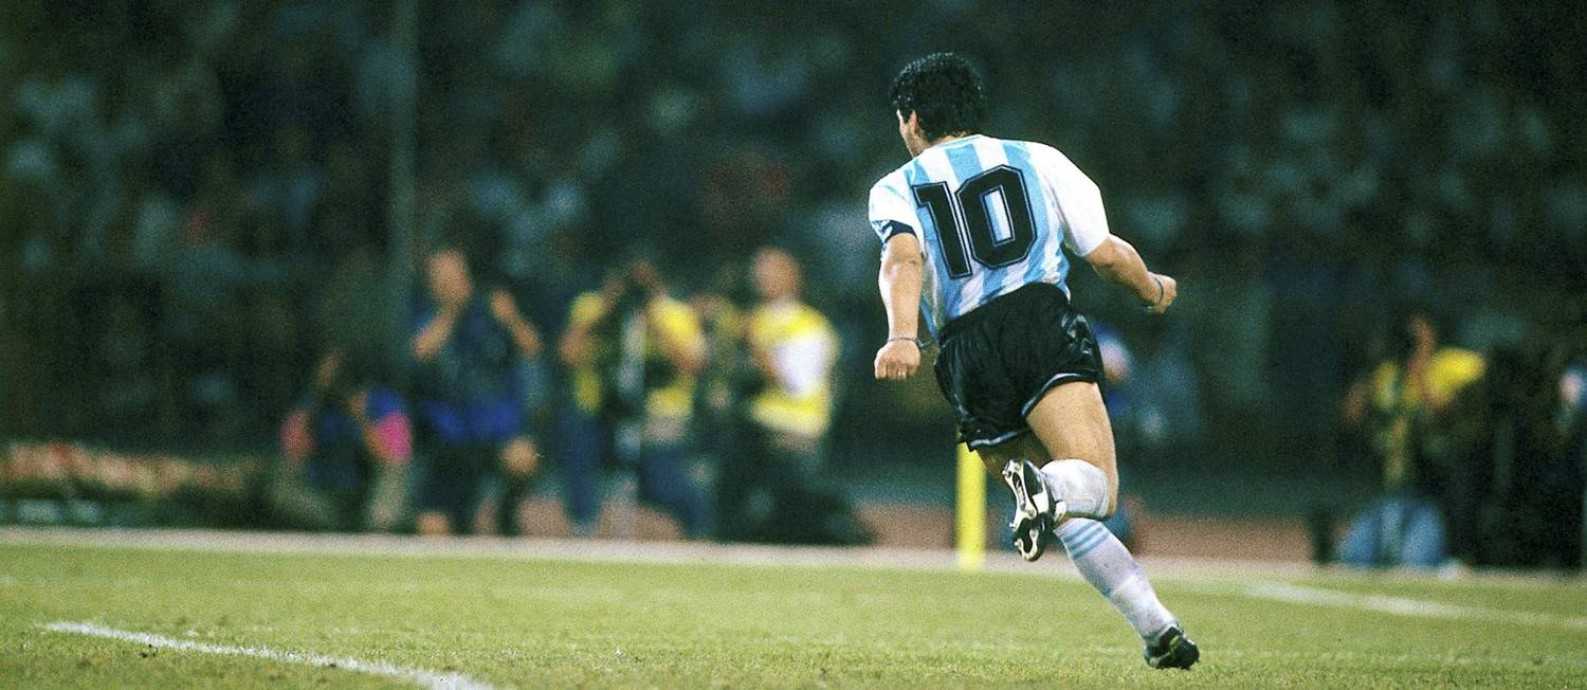 D10S: Maradona (1960-2020), Ícone Pop